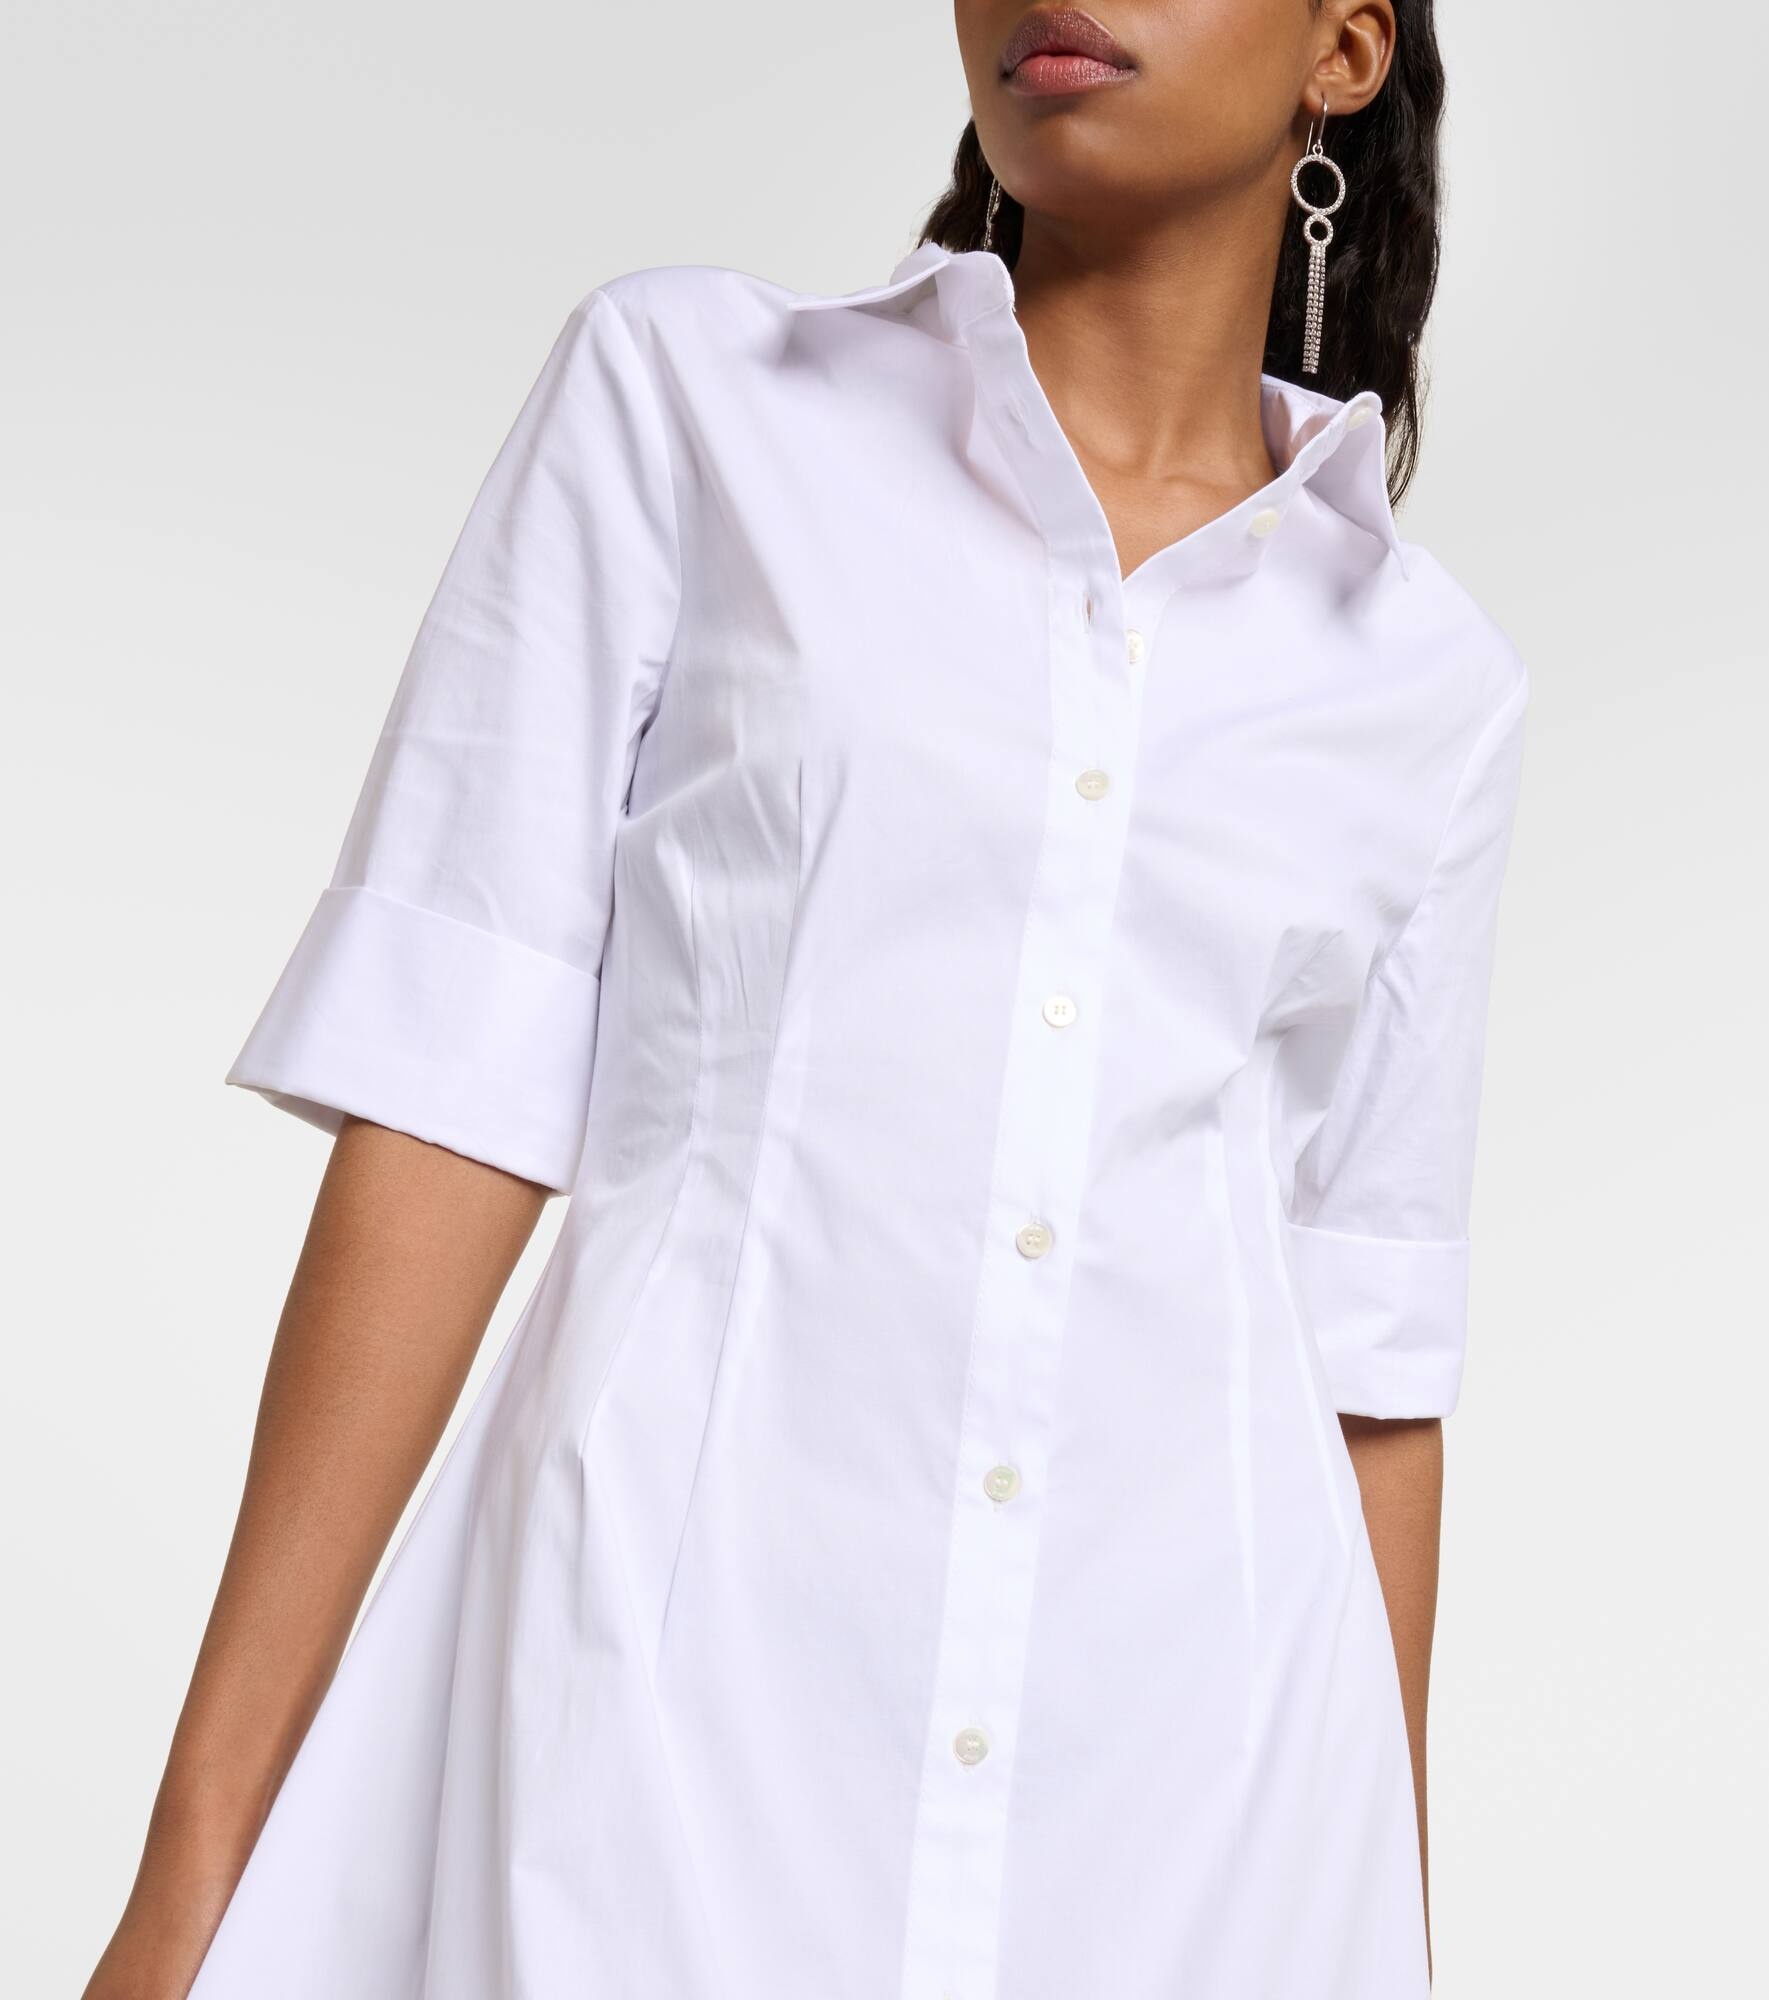 Joan cotton poplin shirt dress - 4